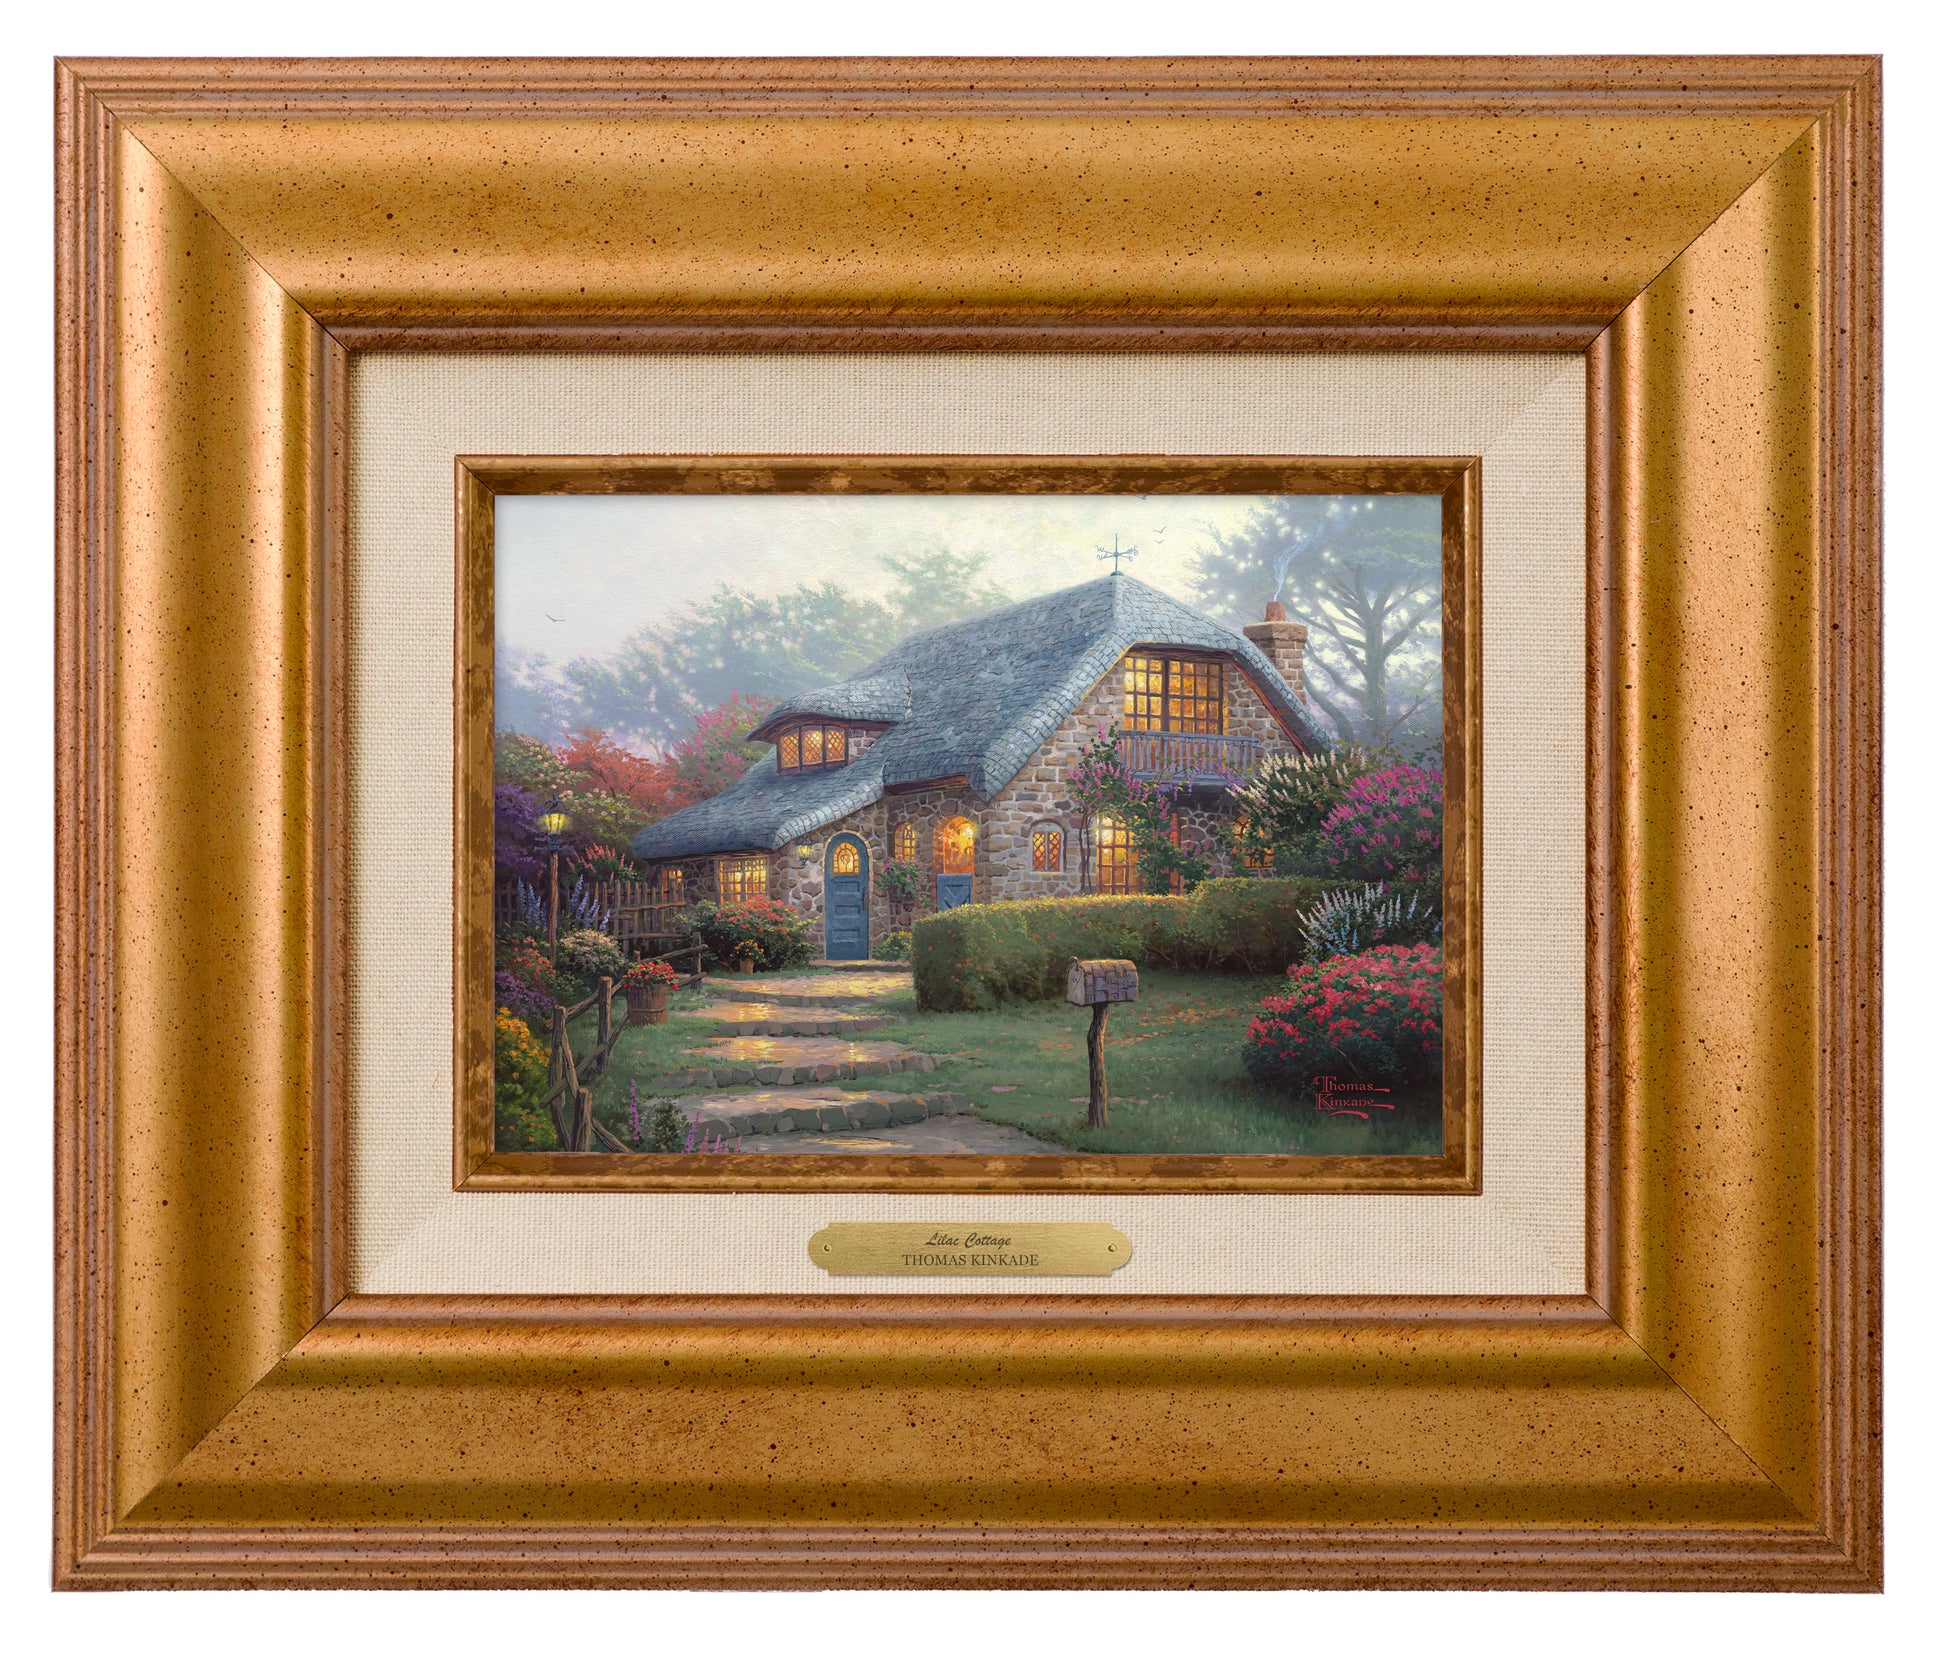 162040_BRW Lilac Cottage 5X7 - Golden Sunset Frame.jpg